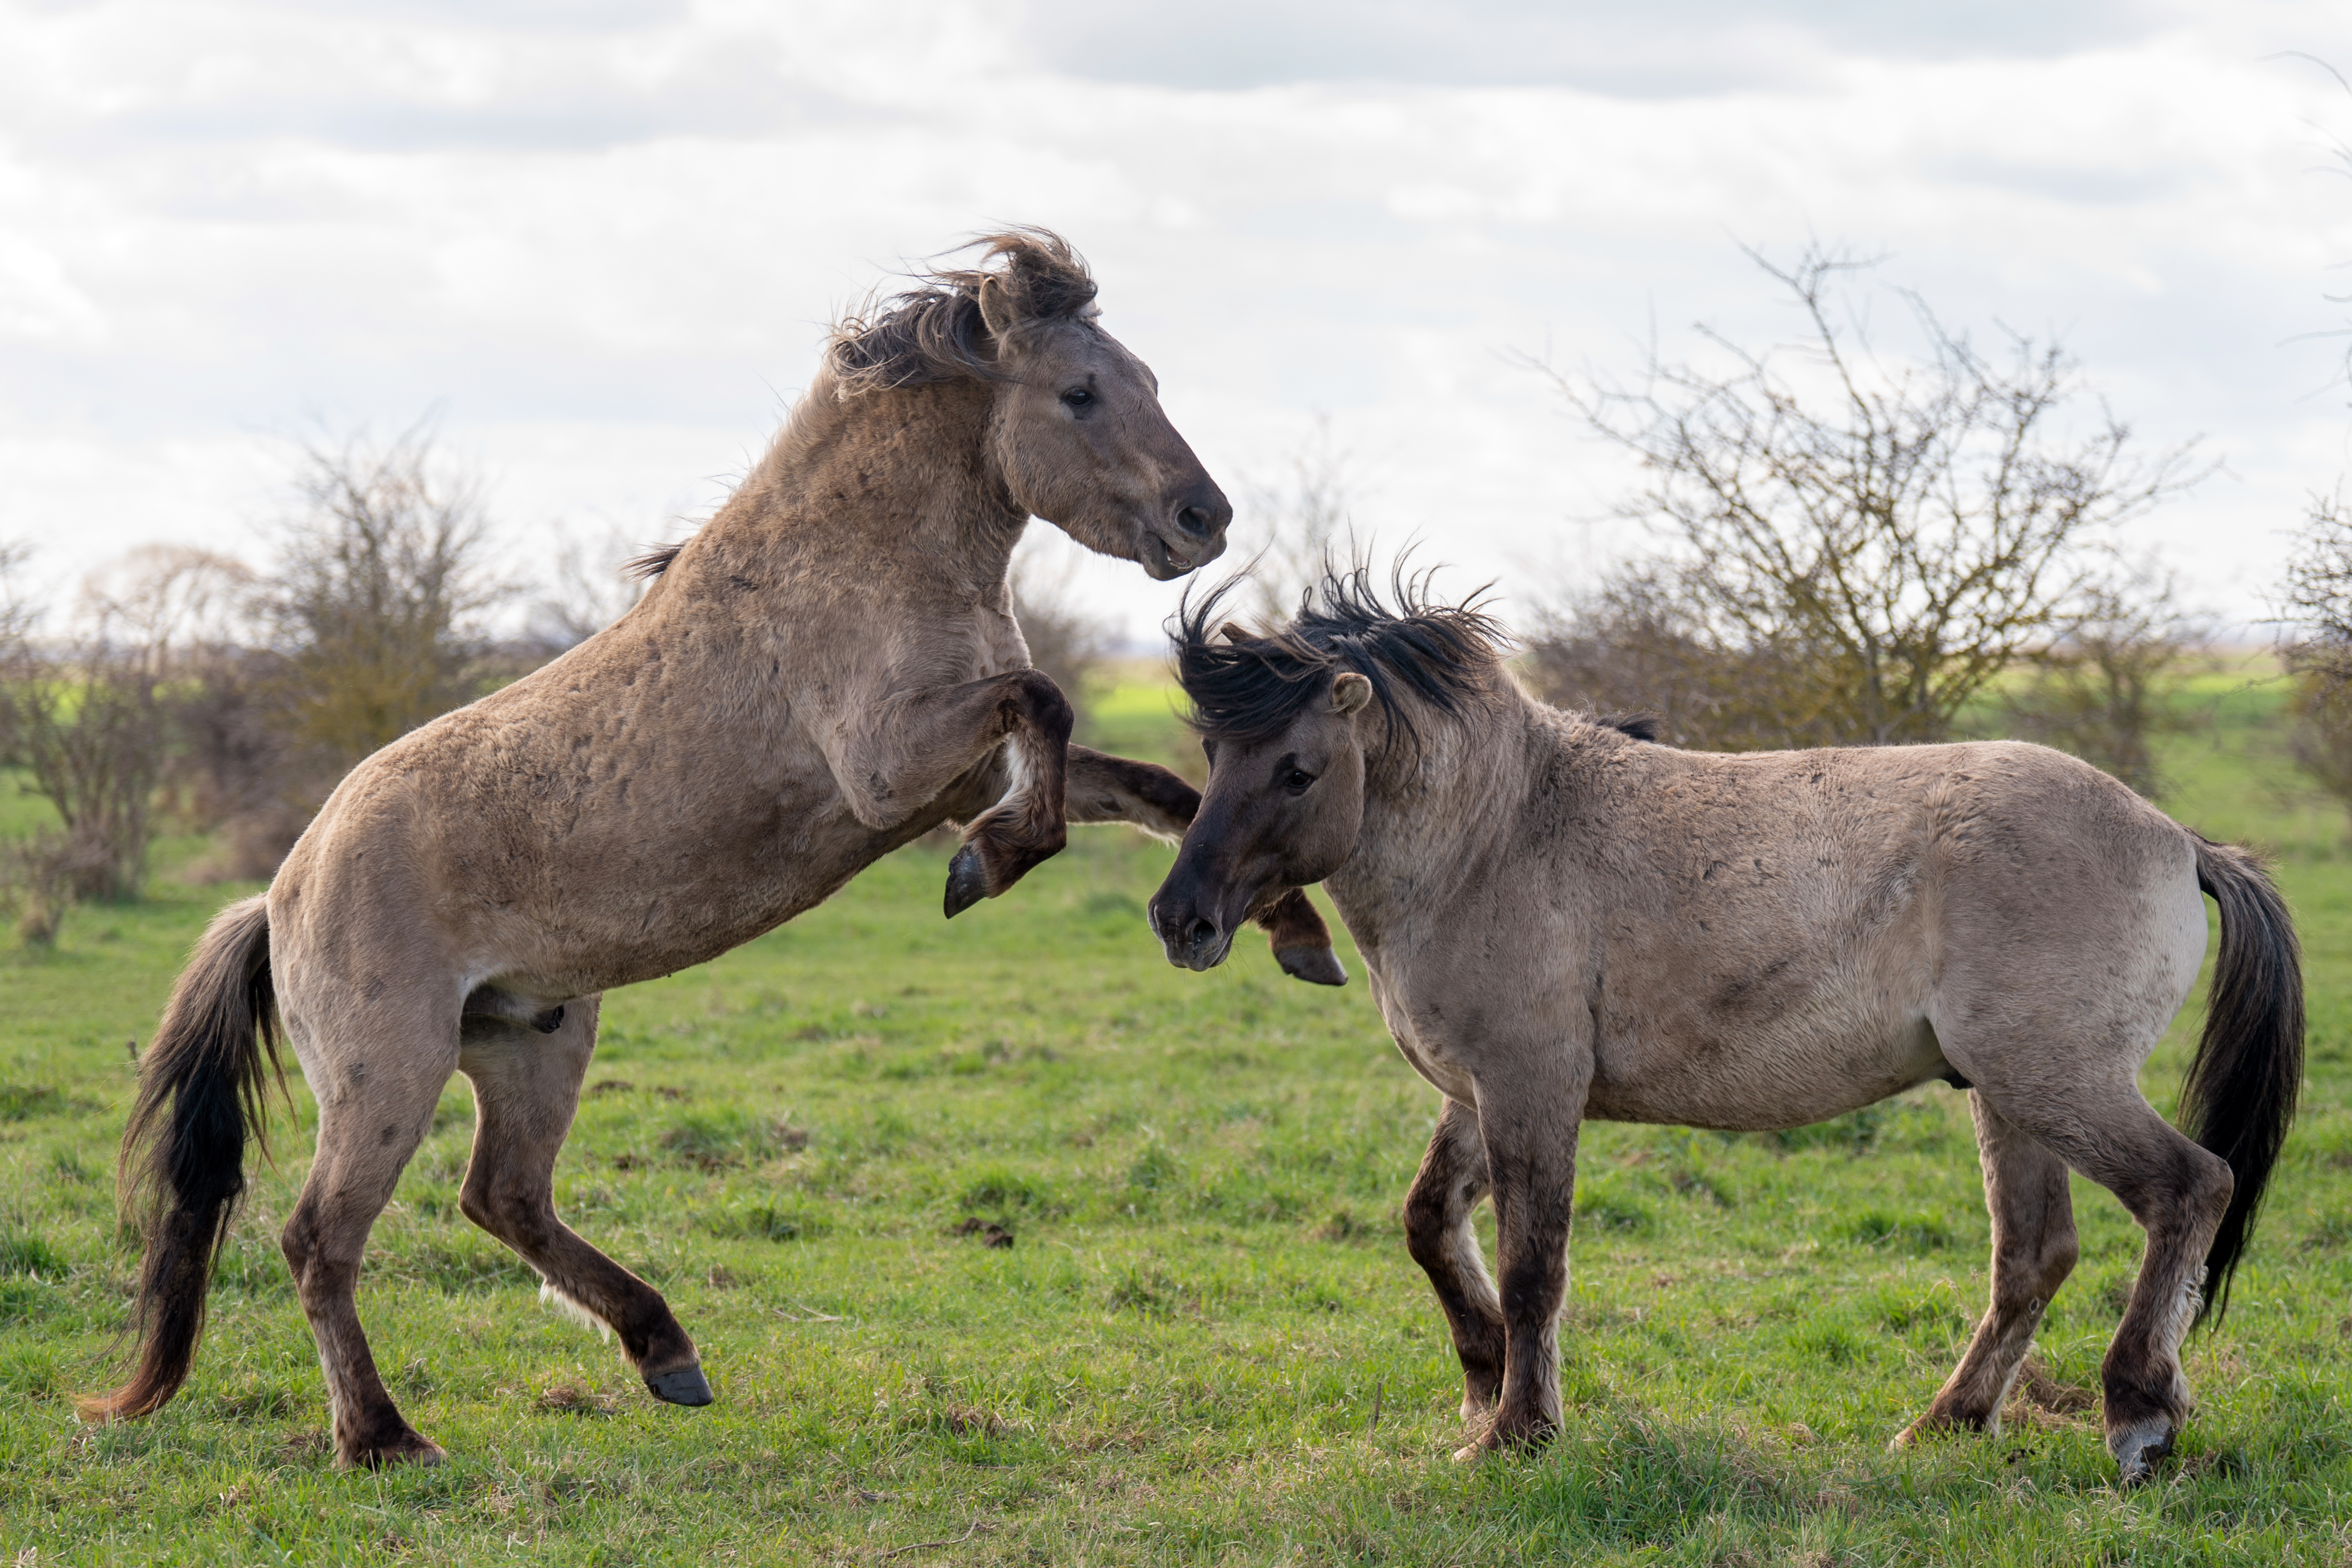 The Konik pony foaling season gets underway at the National Trust's Wicken Fen in Cambridgeshire. (Joe Giddens/ PA)